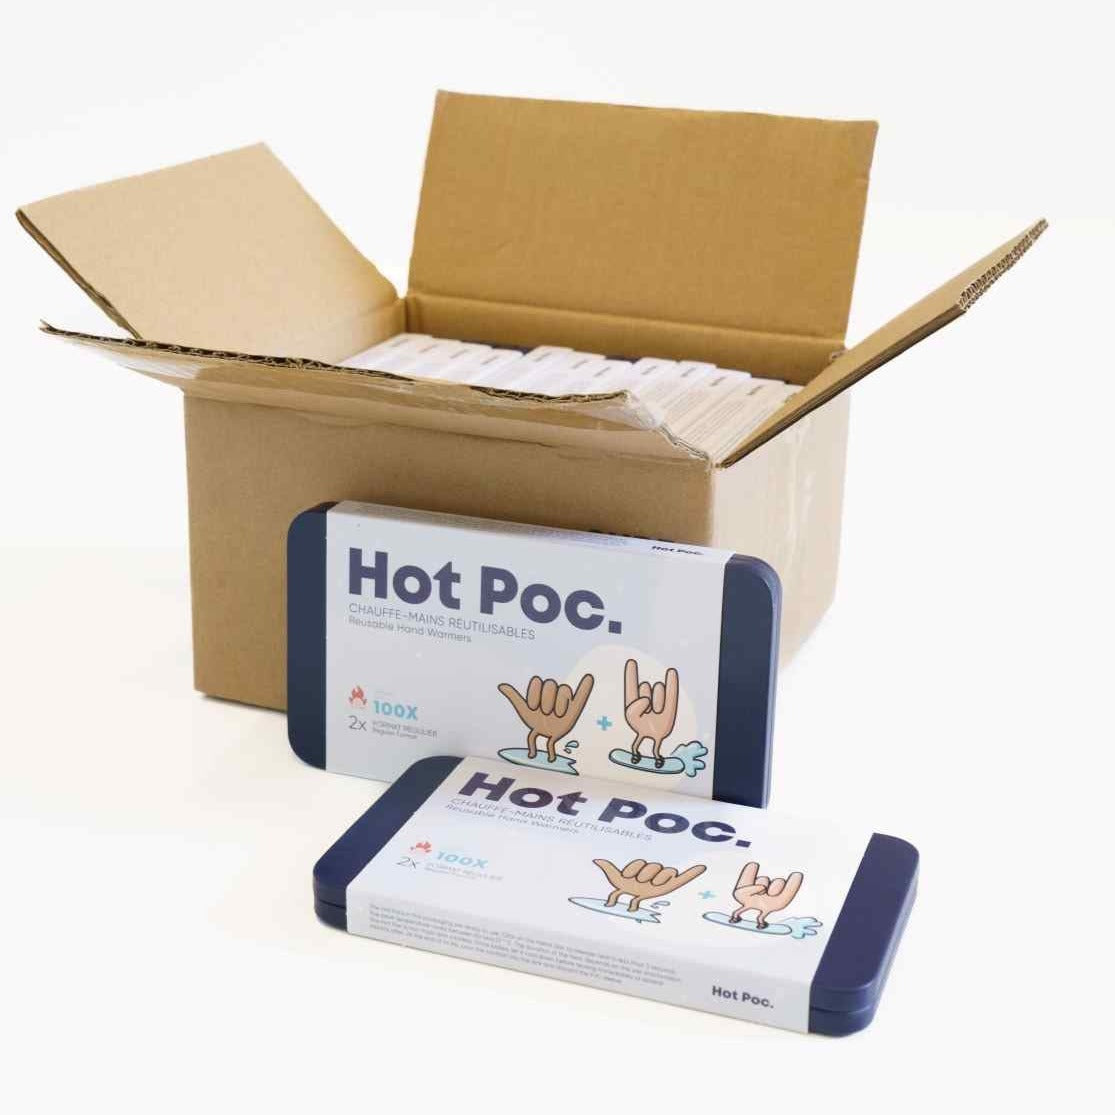 Box of 2 Hot Poc (2 regular) - Case of 12 boxes